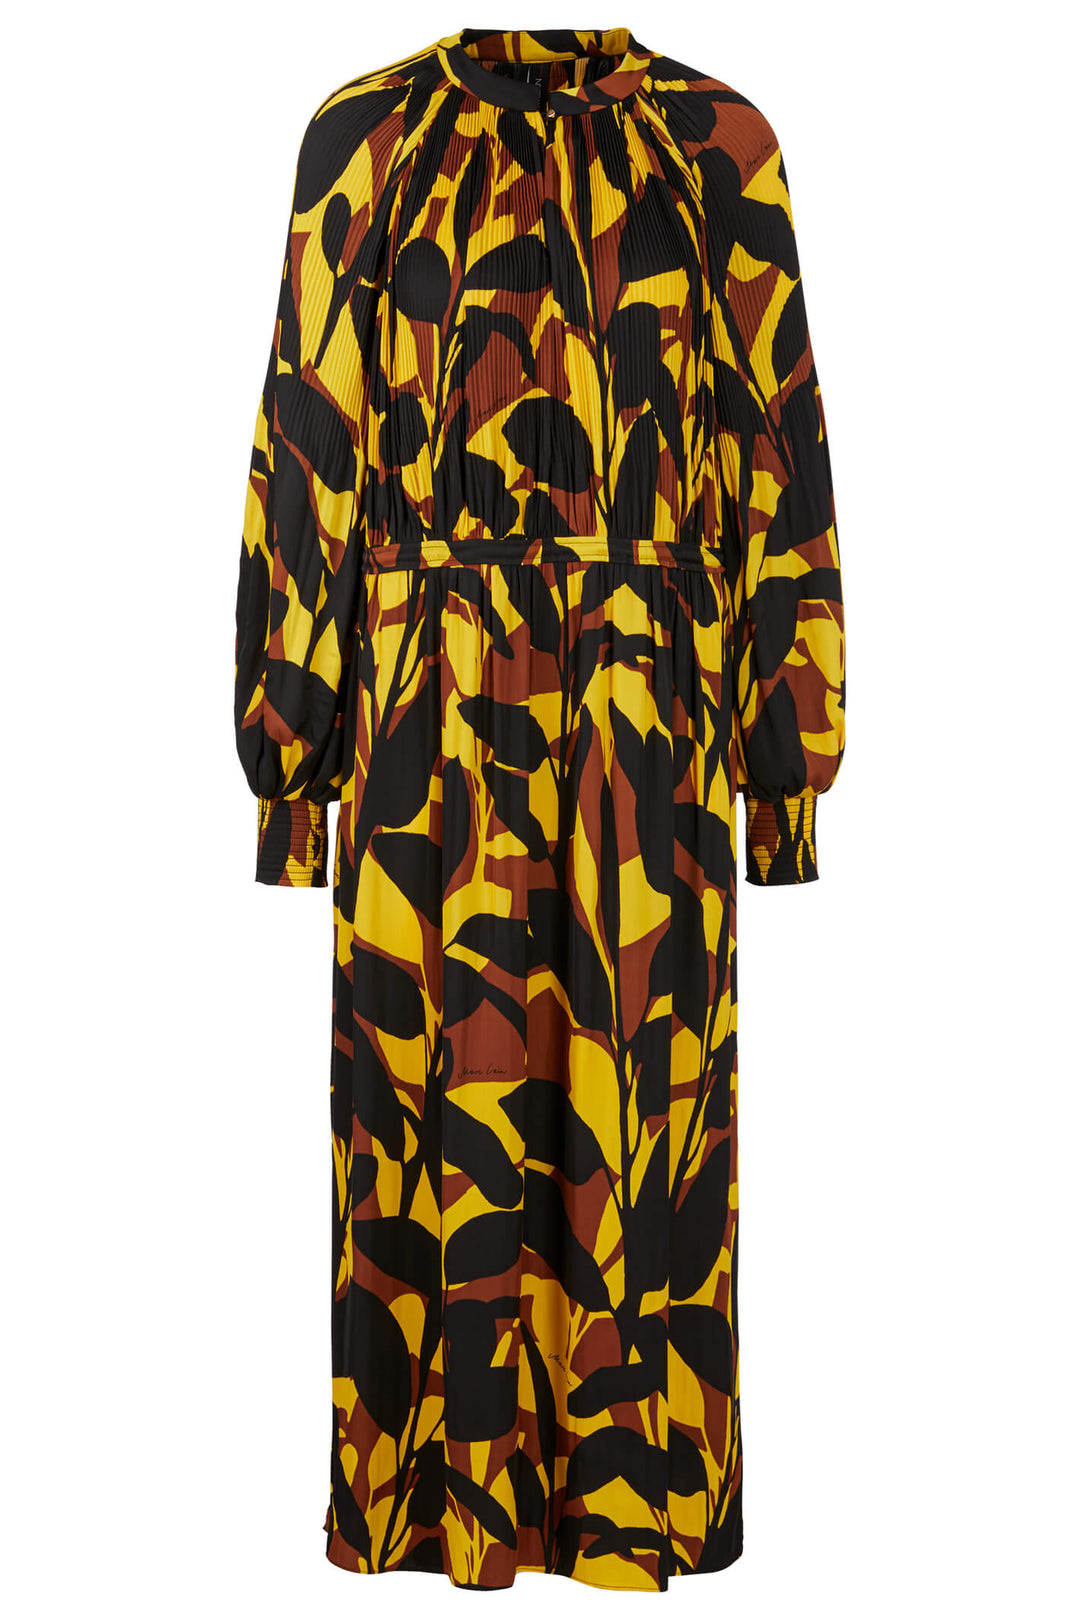 Marc Cain TC 21.36 W89 Saffron Yellow Long Sleeve Dress - Olivia Grace Fashion